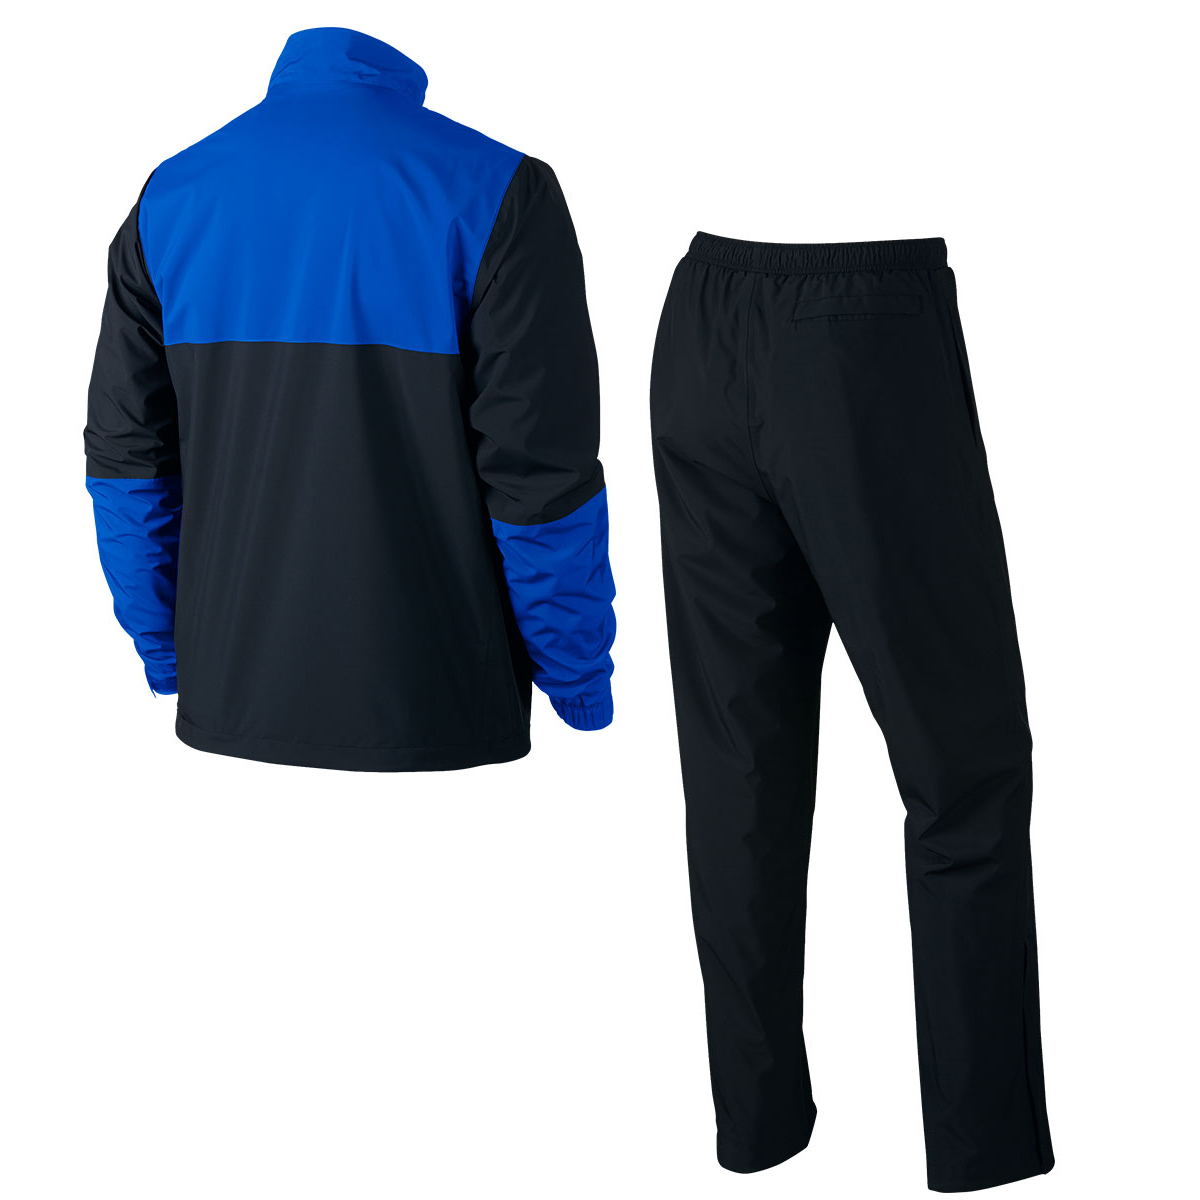 Nike Golf Storm-Fit Waterproof Suit | Online Golf